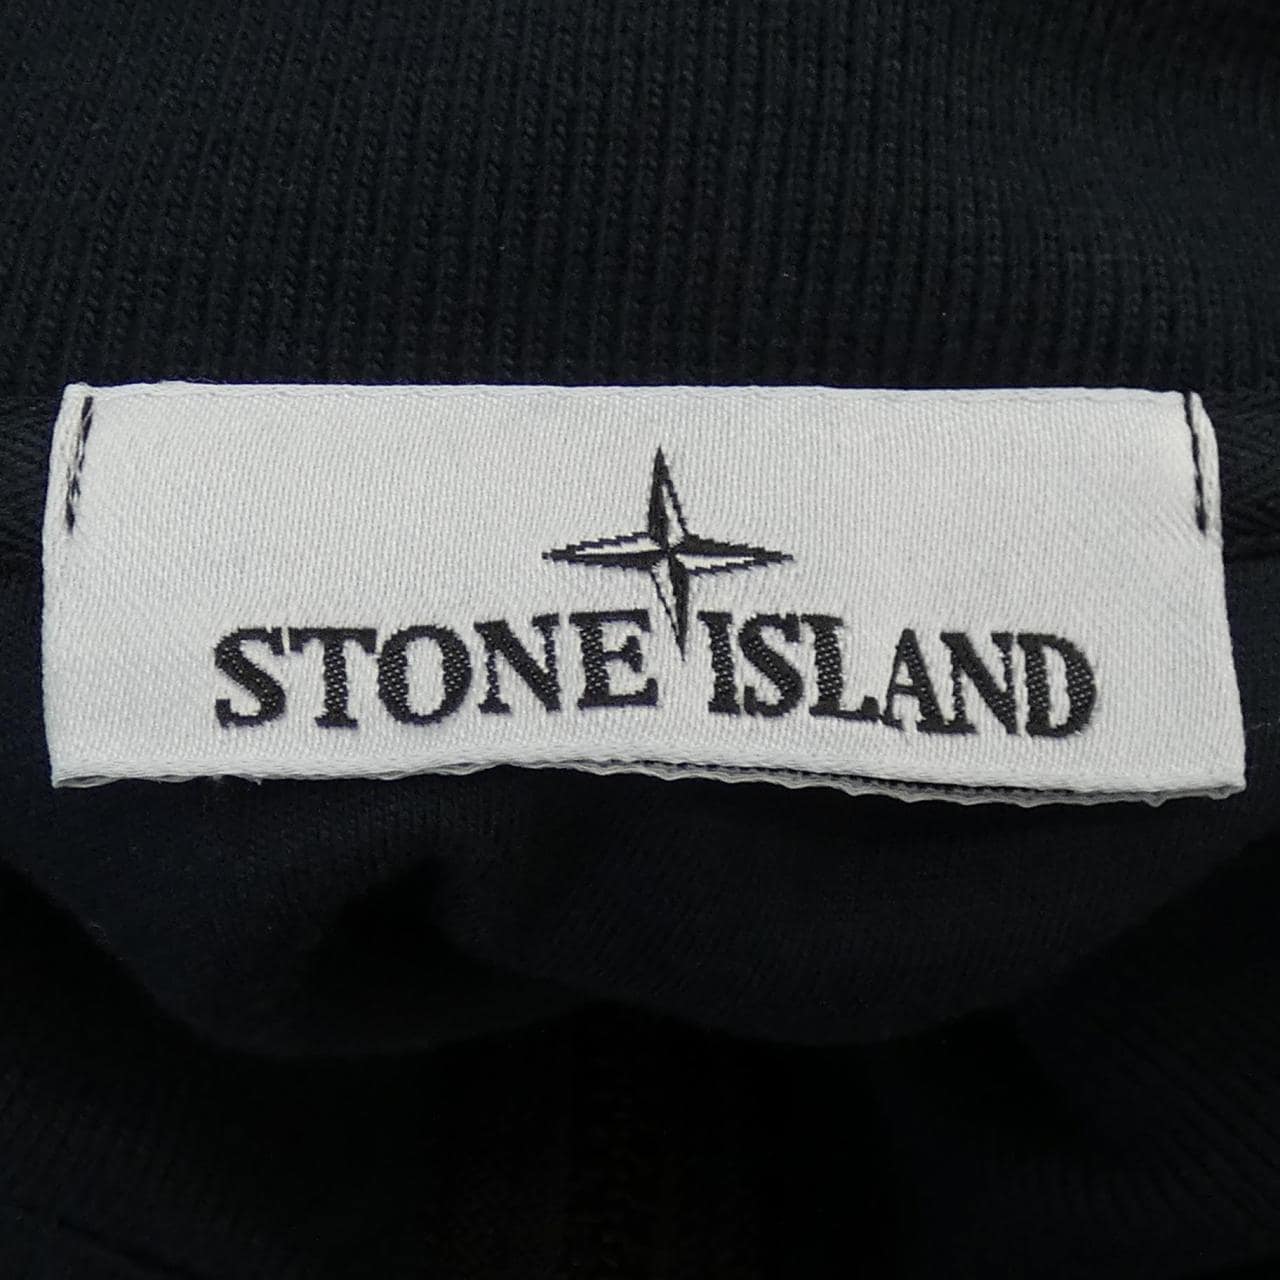 石岛STONE ISLAND运动衫